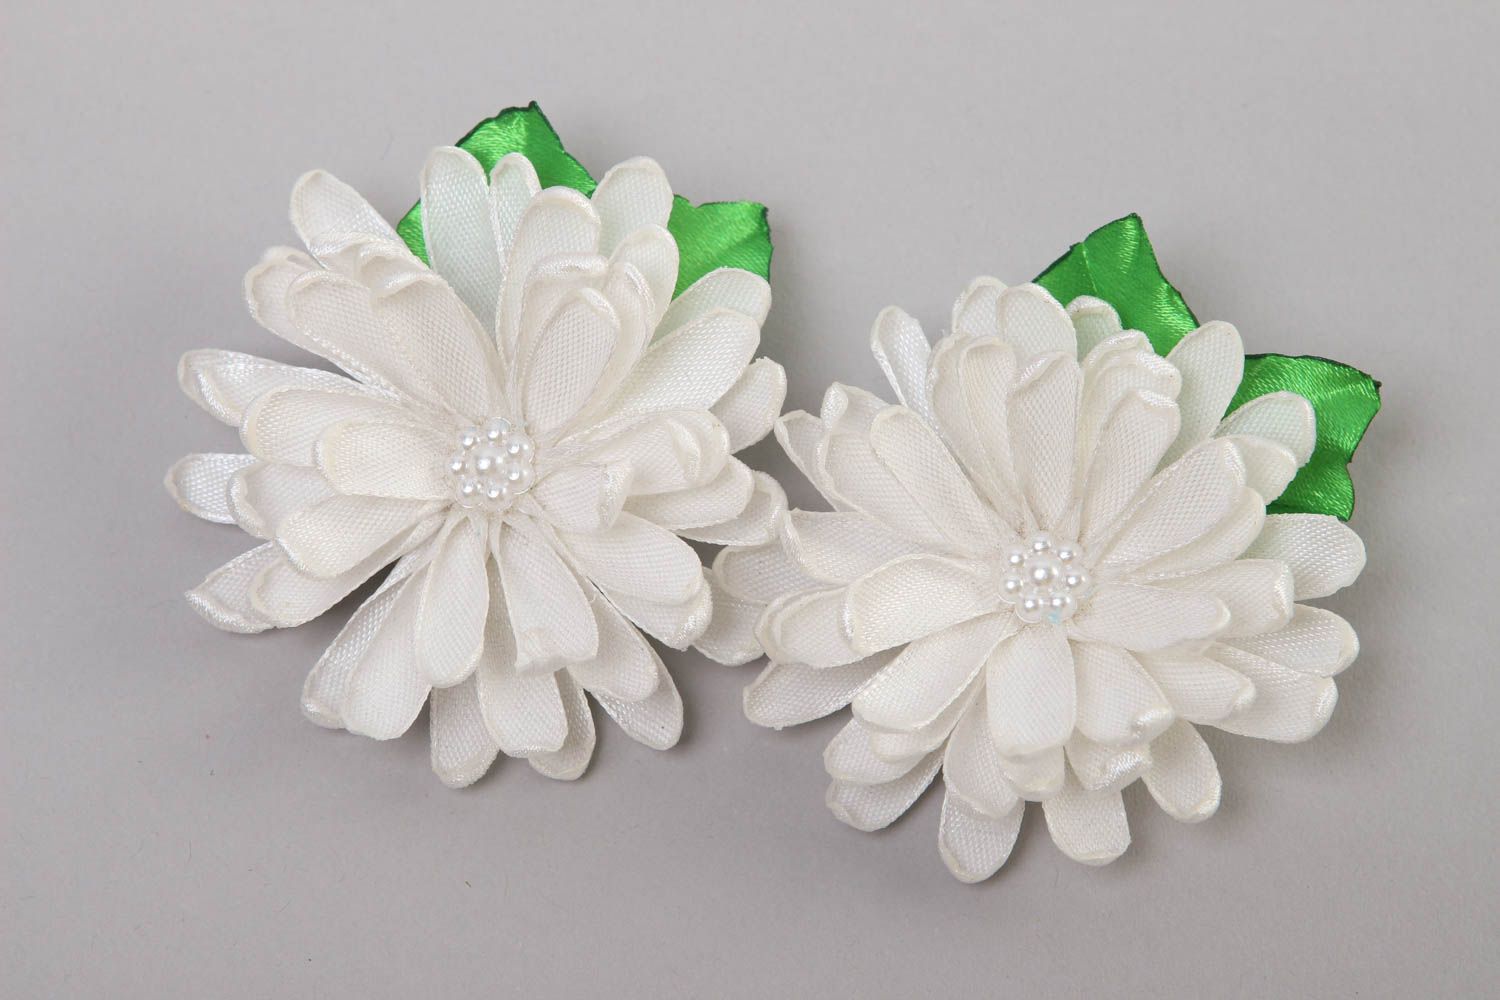 Handmade designer accessories 2 white flower hair clips stylish hair clips photo 2